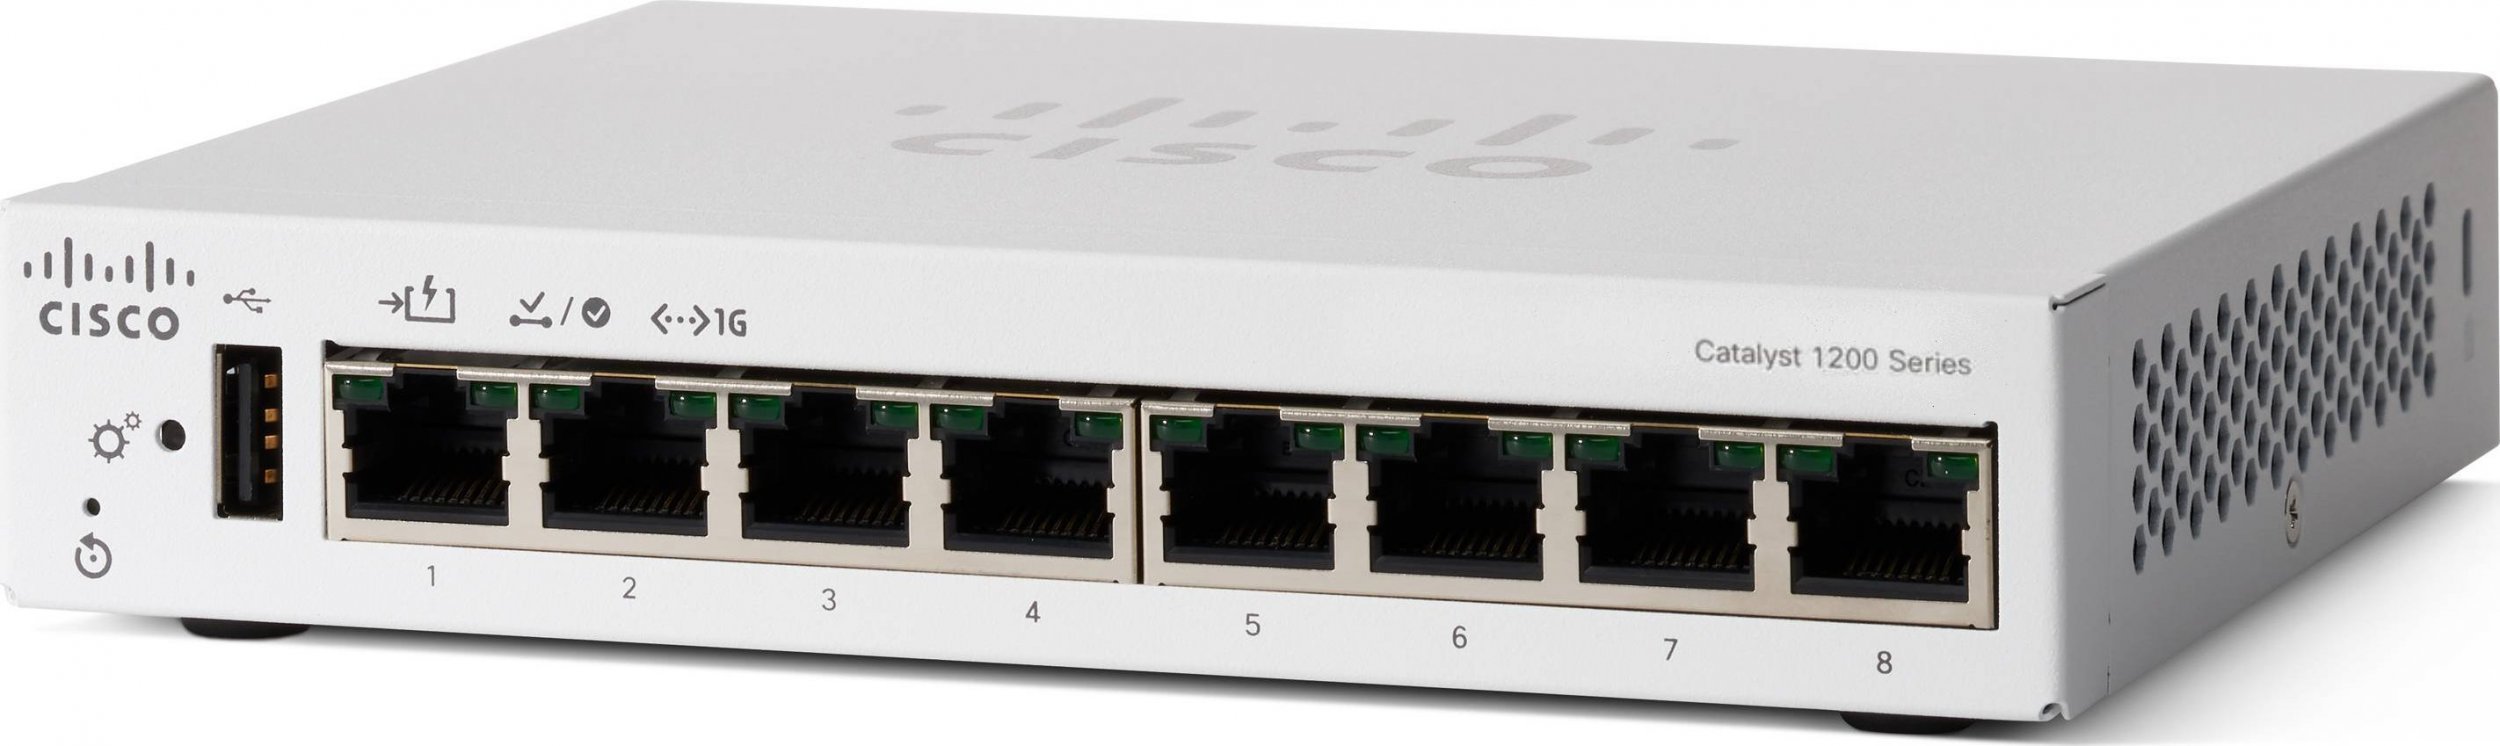 Switch Cisco Cisco Przelacznik Cat1200 8-p GE Desktop Ext PS PoE Input